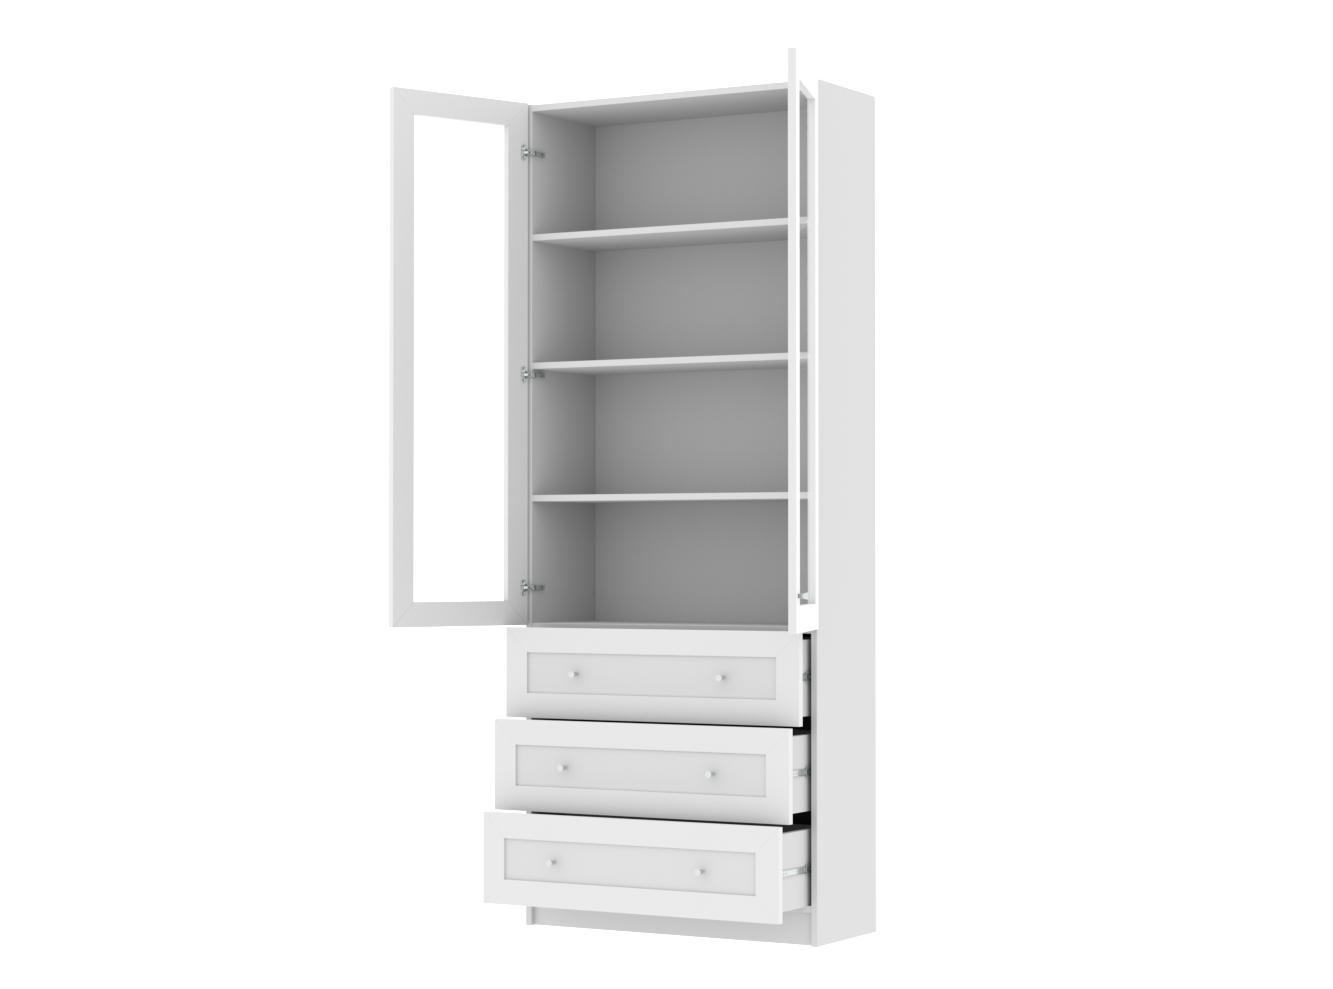  Книжный шкаф Билли 355 white ИКЕА (IKEA) изображение товара